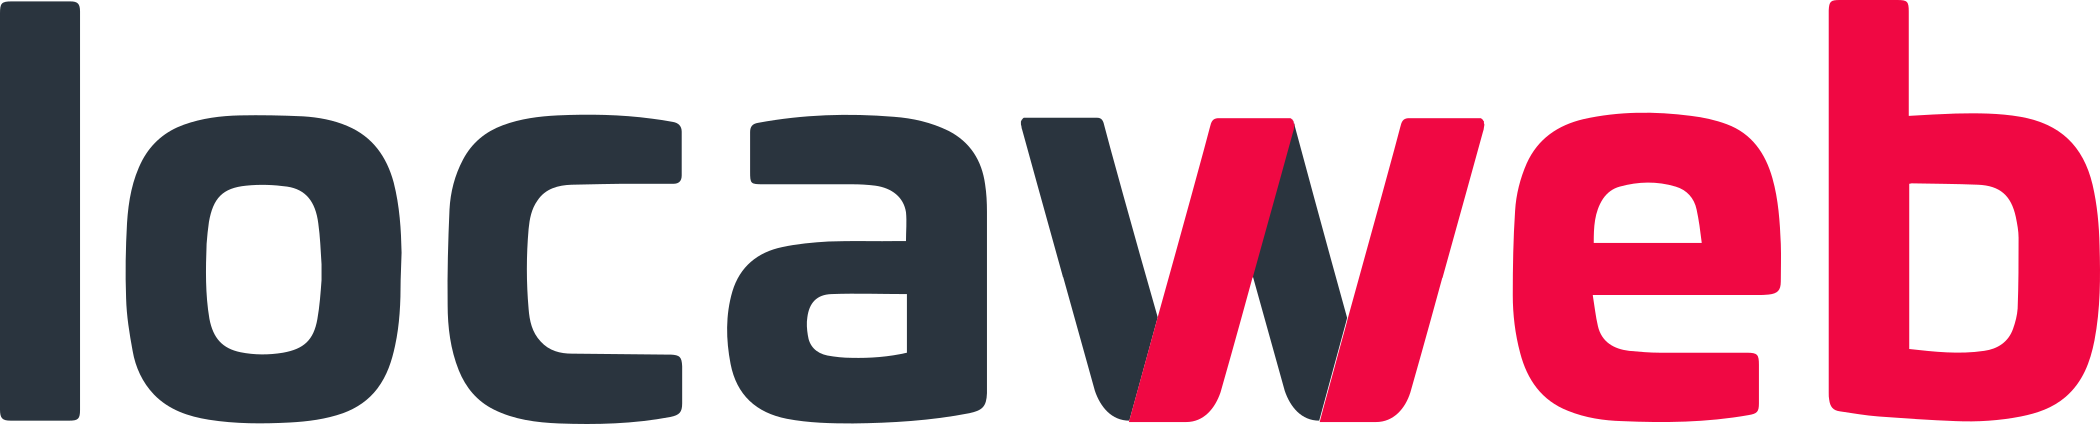 Locaweb logo.